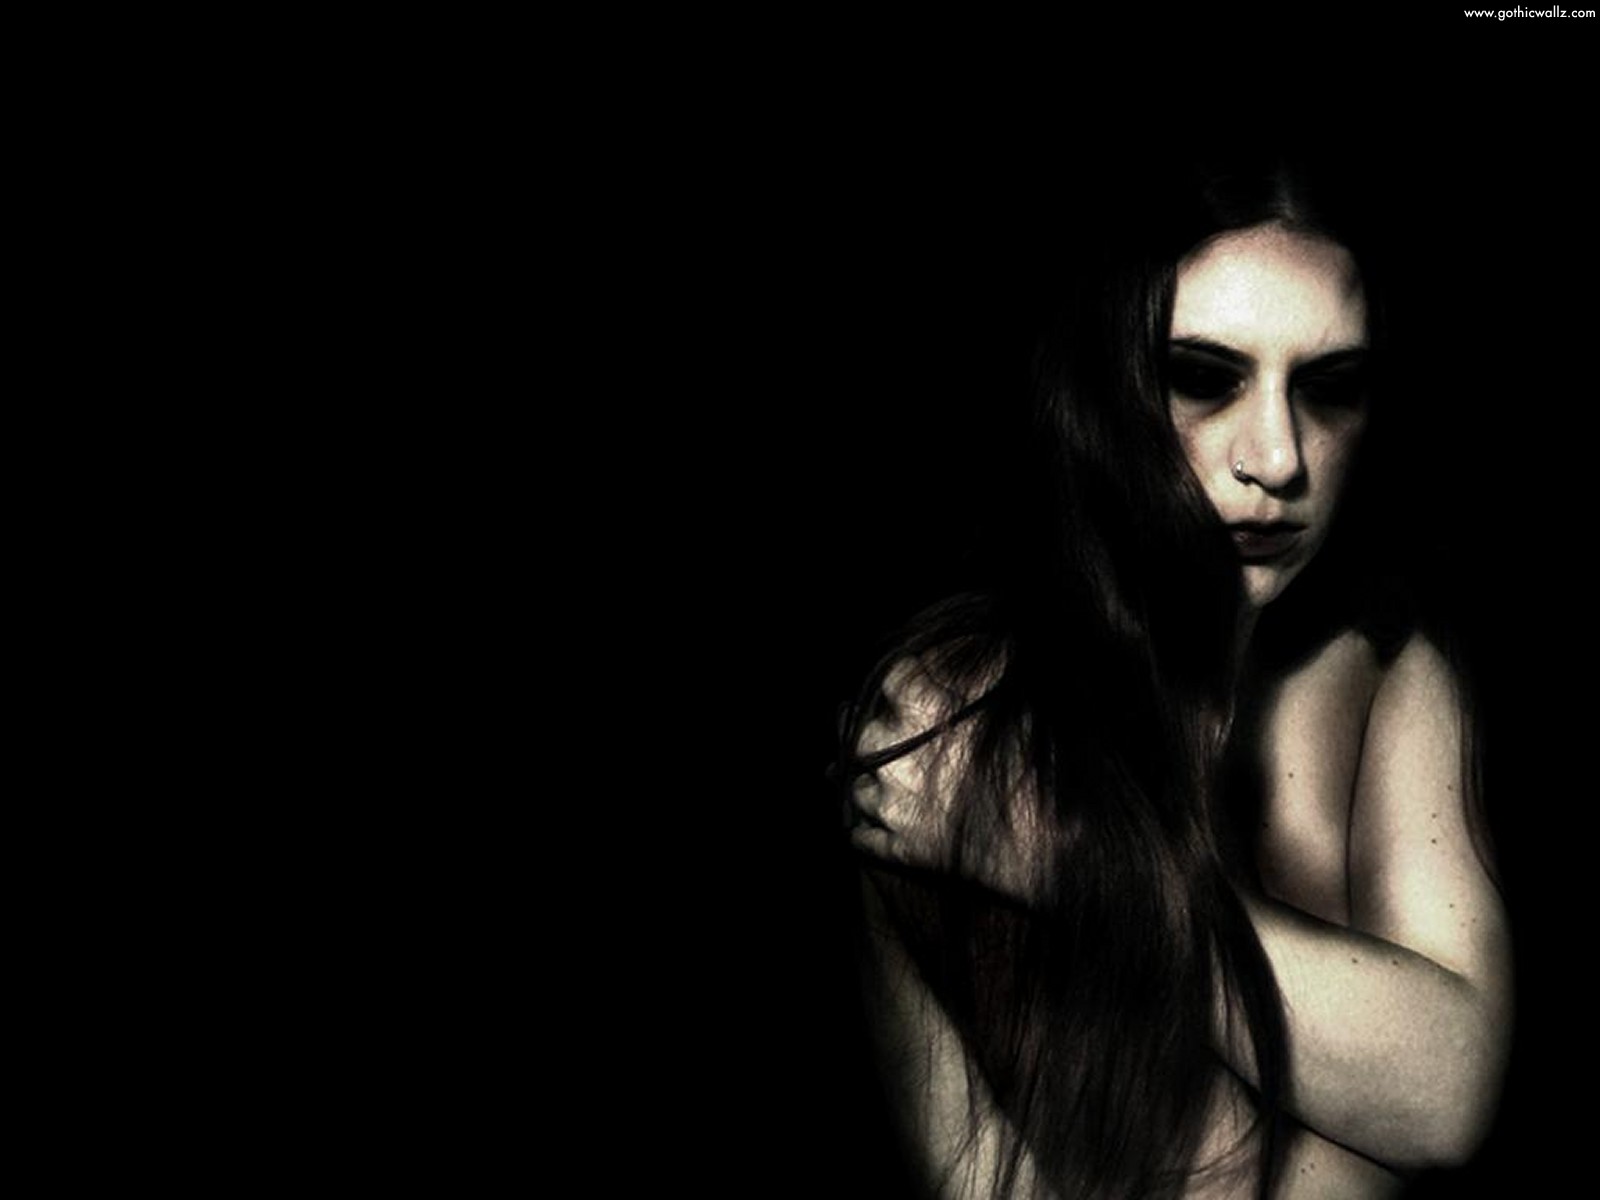 Hurt Woman | Dark Gothic Wallpaper Download